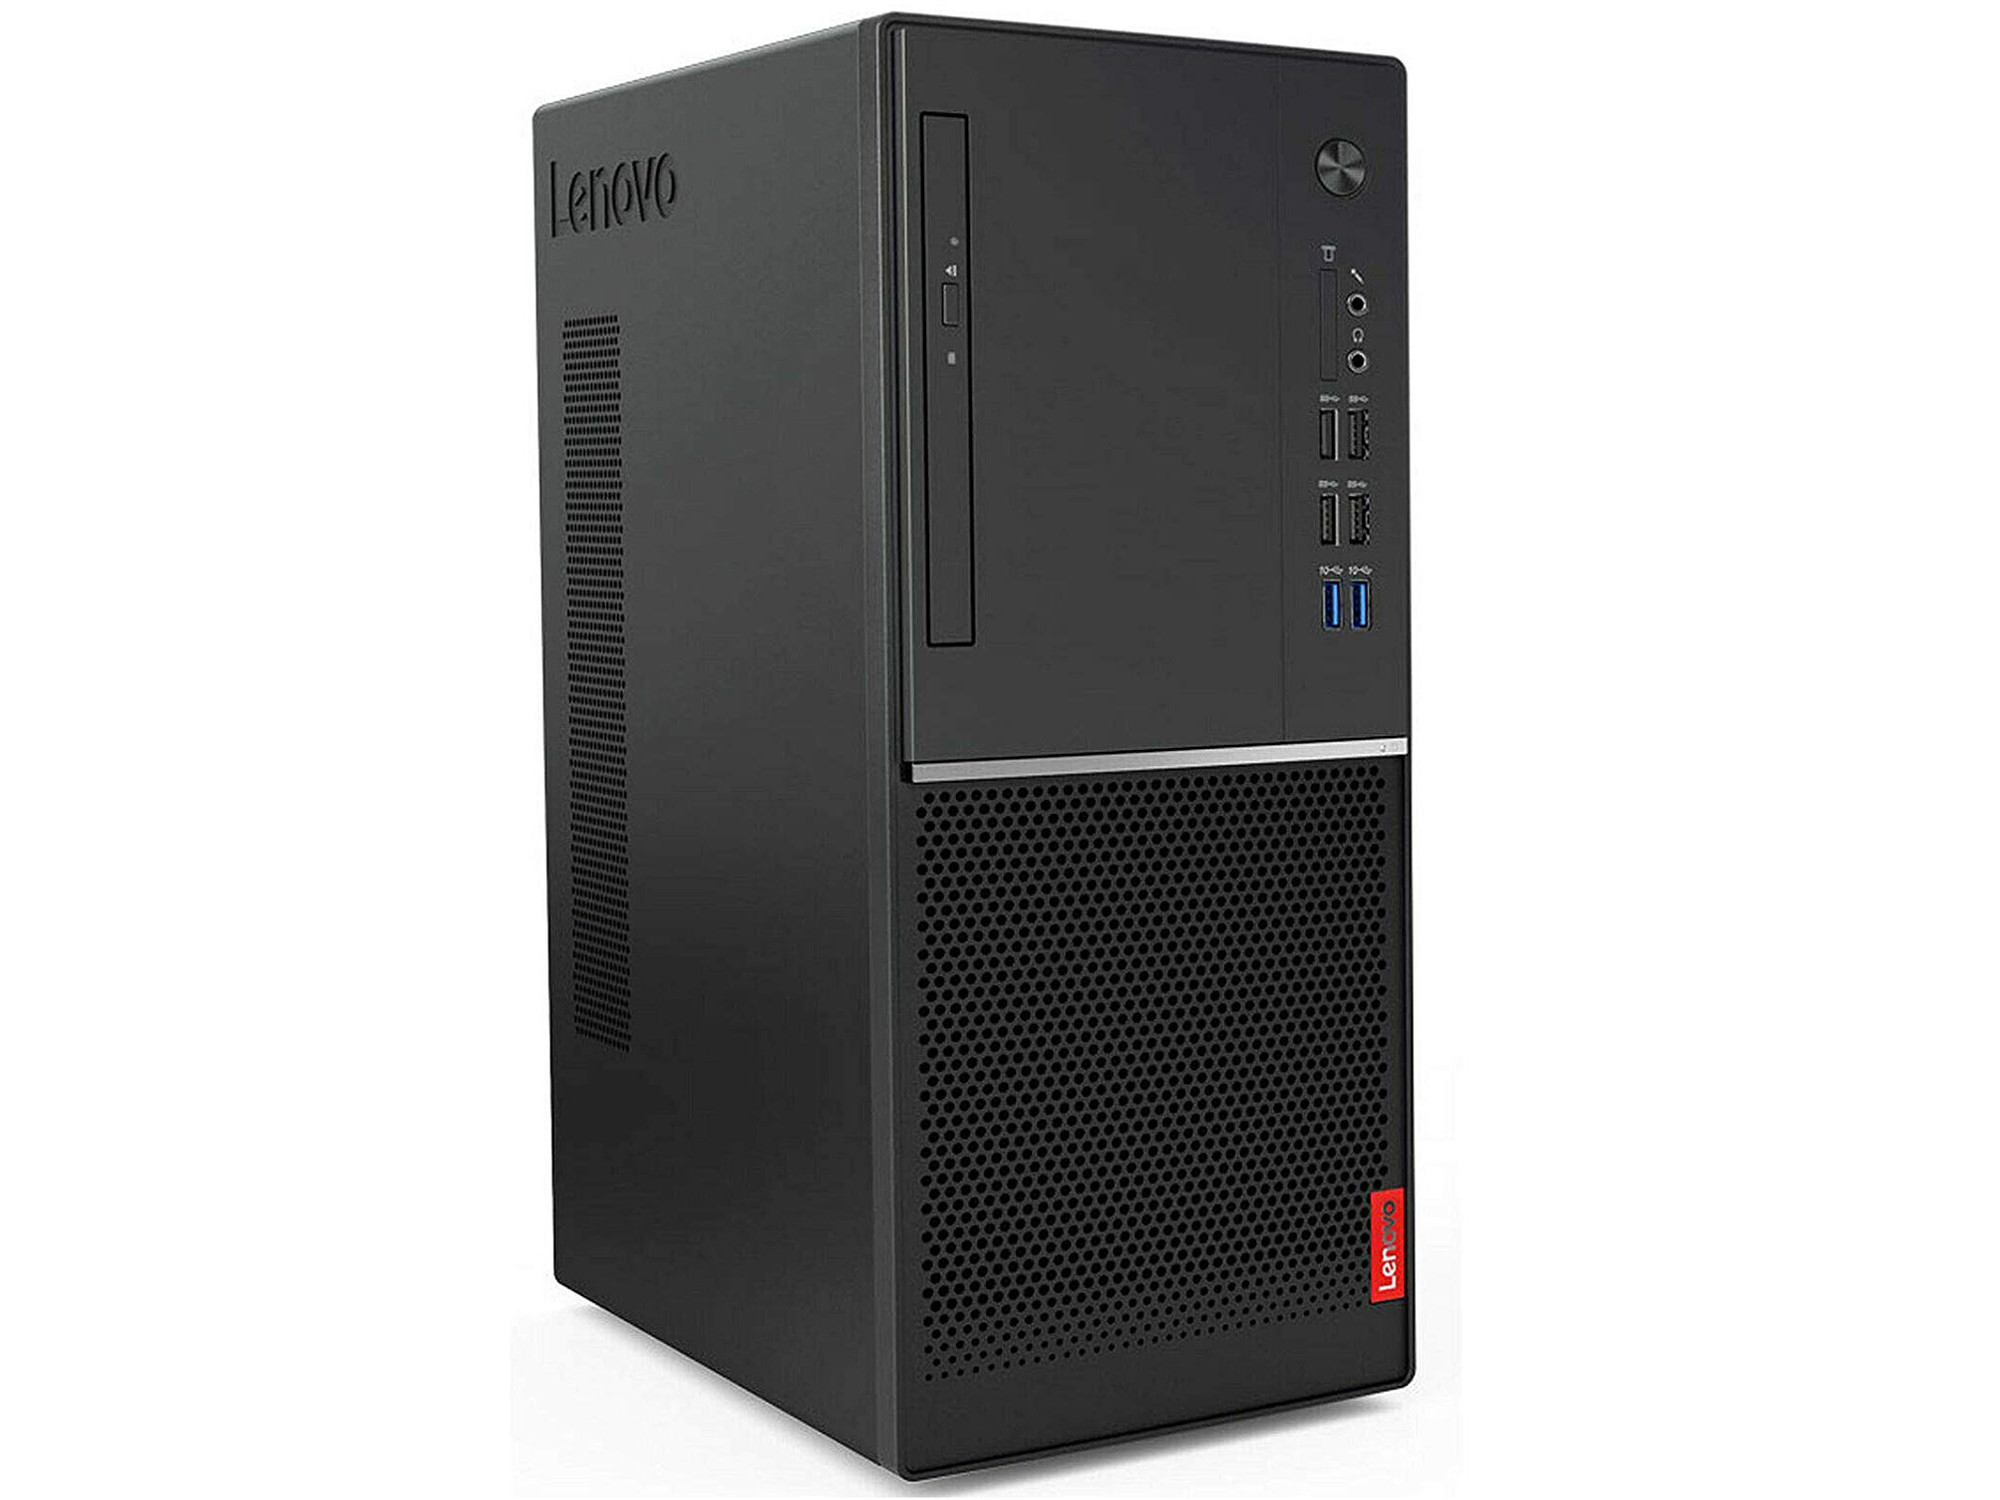 Lenovo V530 Desktop Desktop Tower Computer, Intel Core i3, 4GB RAM, 512GB SSD, Windows 10, Black, V530UKi391-4512P - image 2 of 5